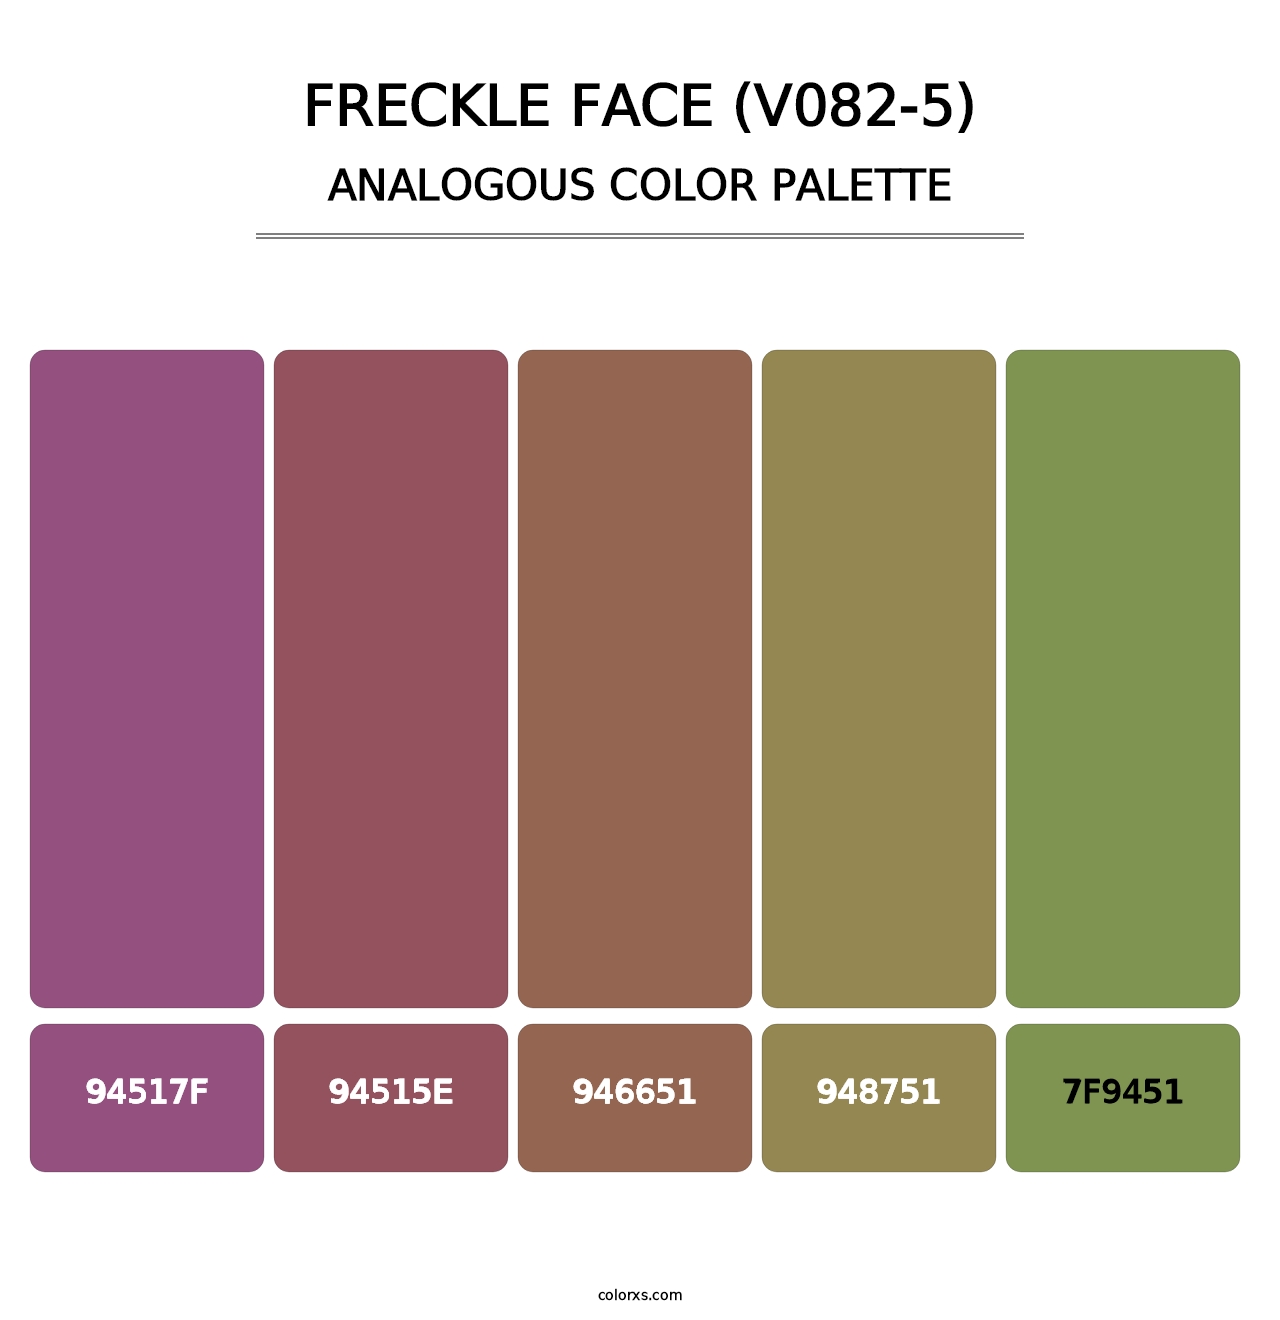 Freckle Face (V082-5) - Analogous Color Palette